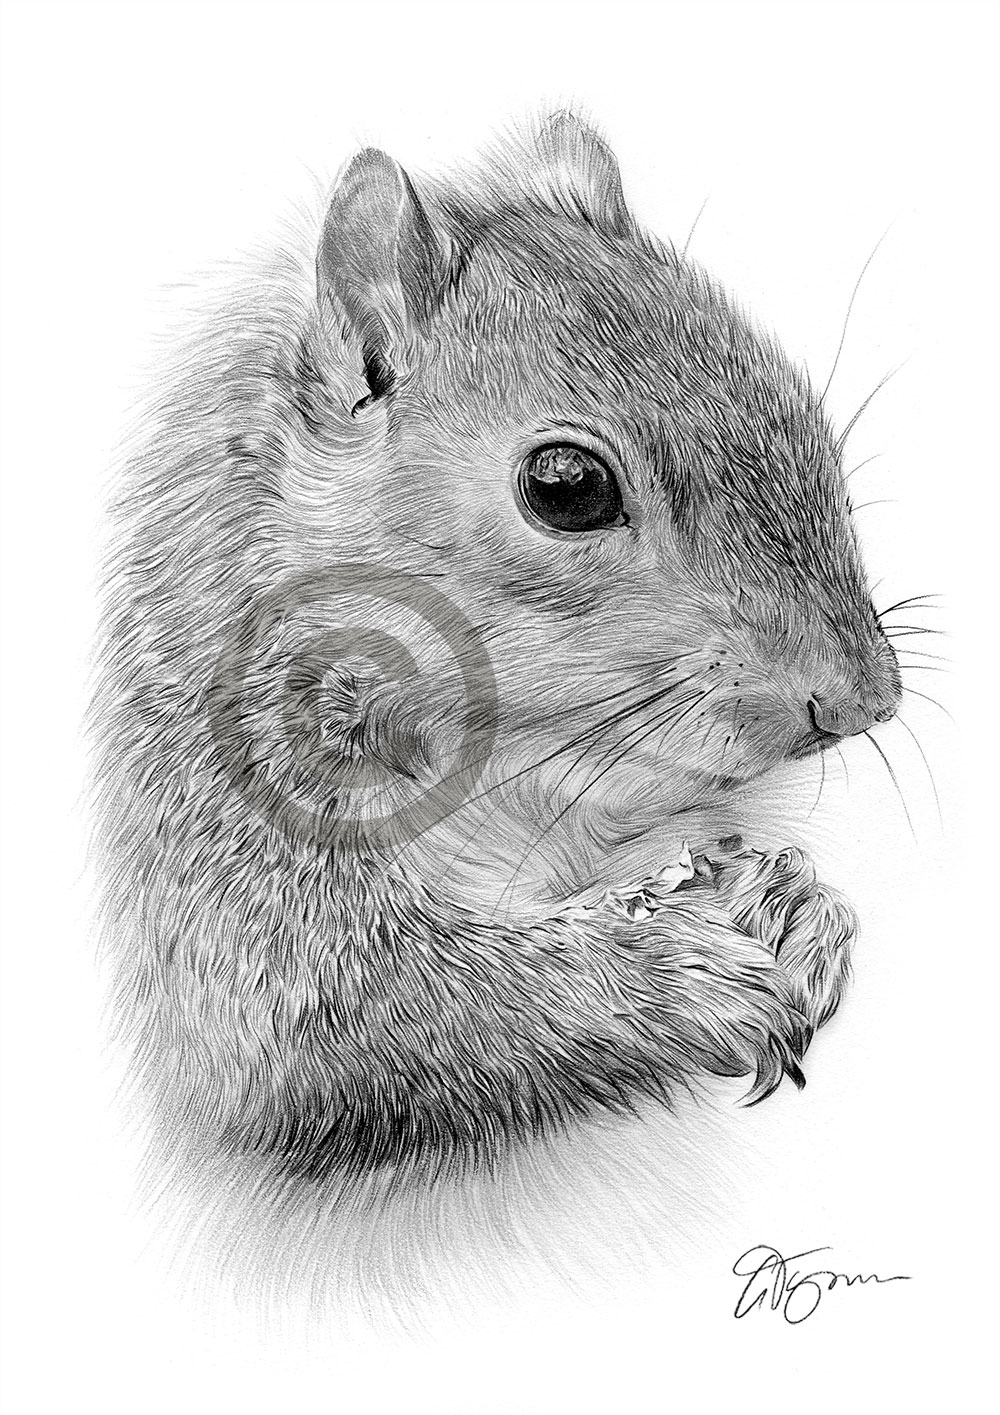 Pencil drawing of a grey squirrel by artist Gary Tymon